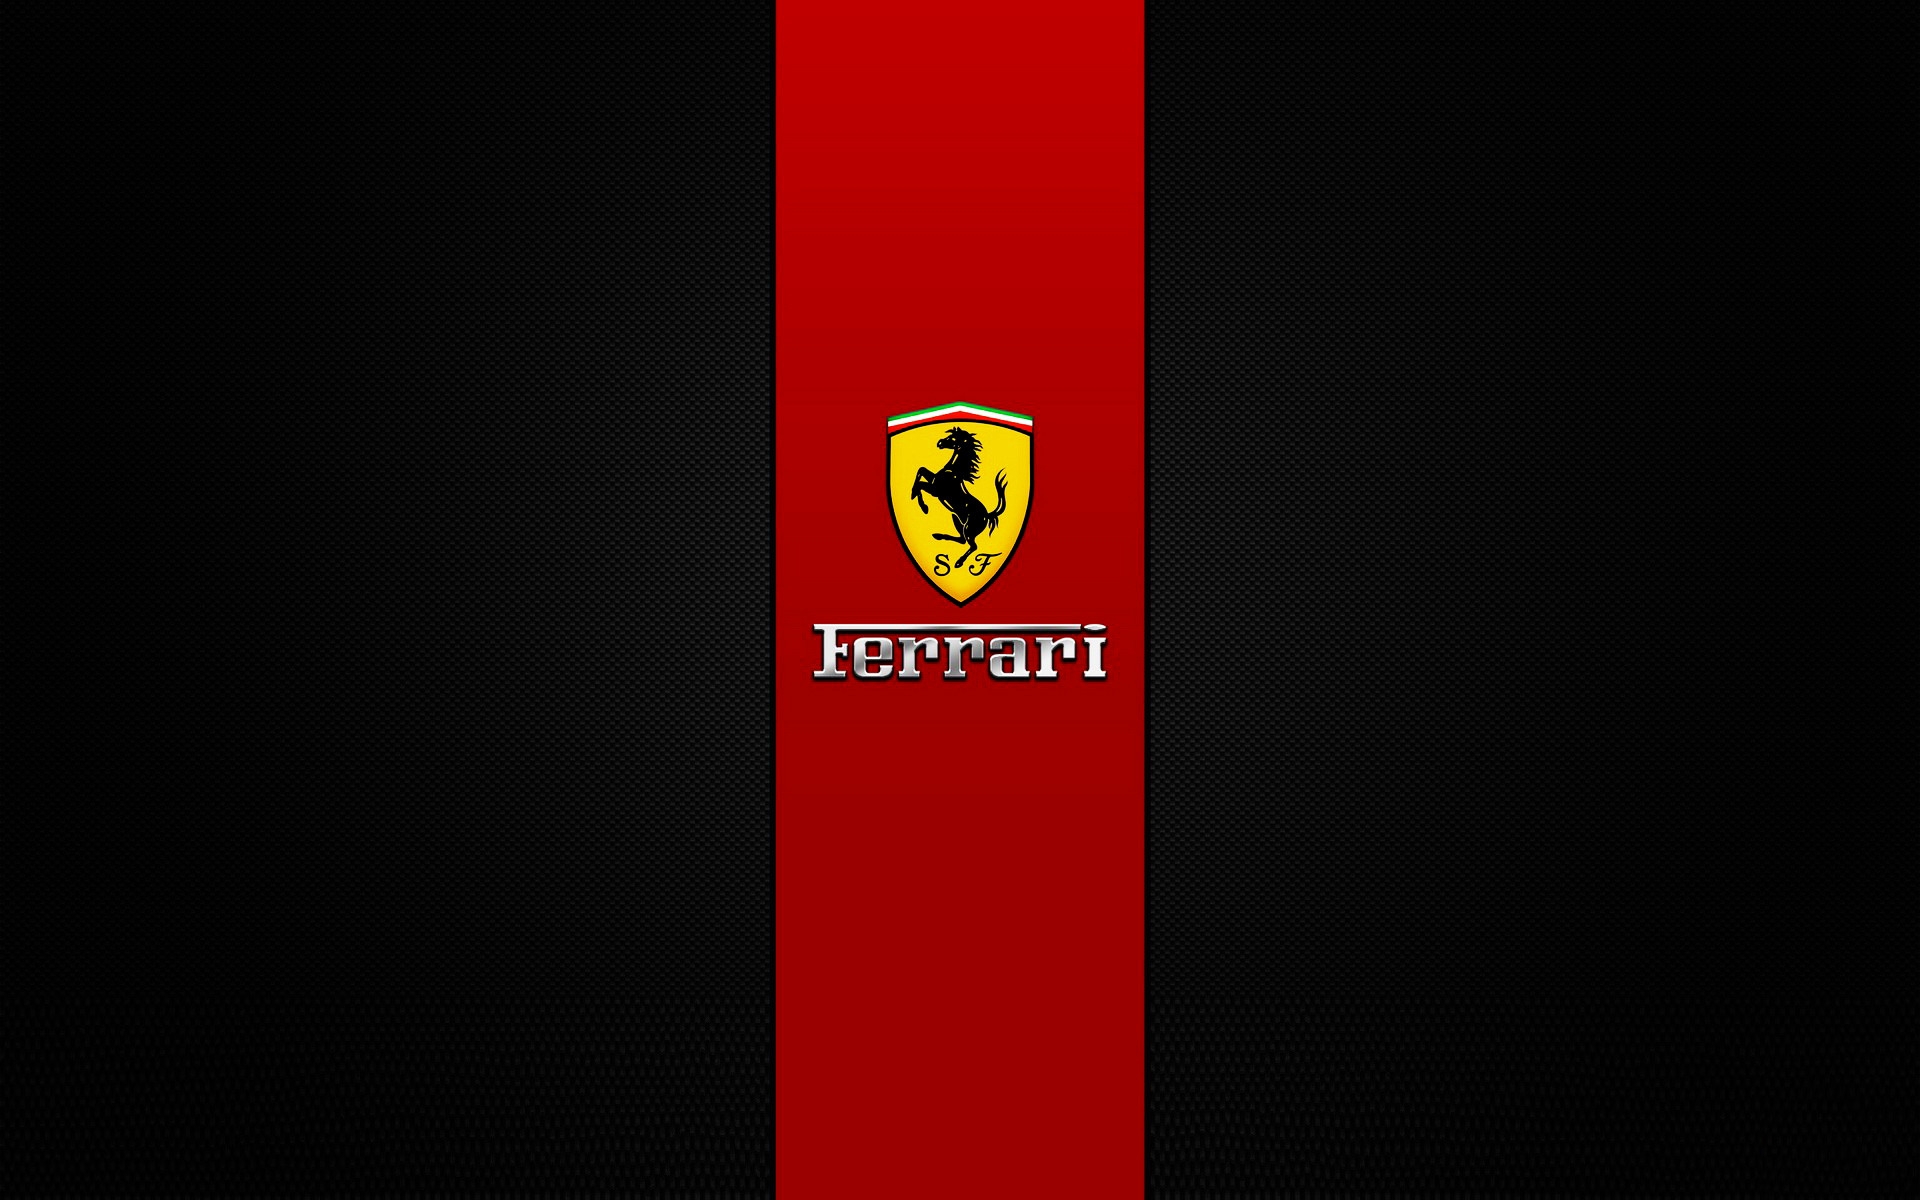 Ferrari Brand Logo for 1920 x 1200 widescreen resolution